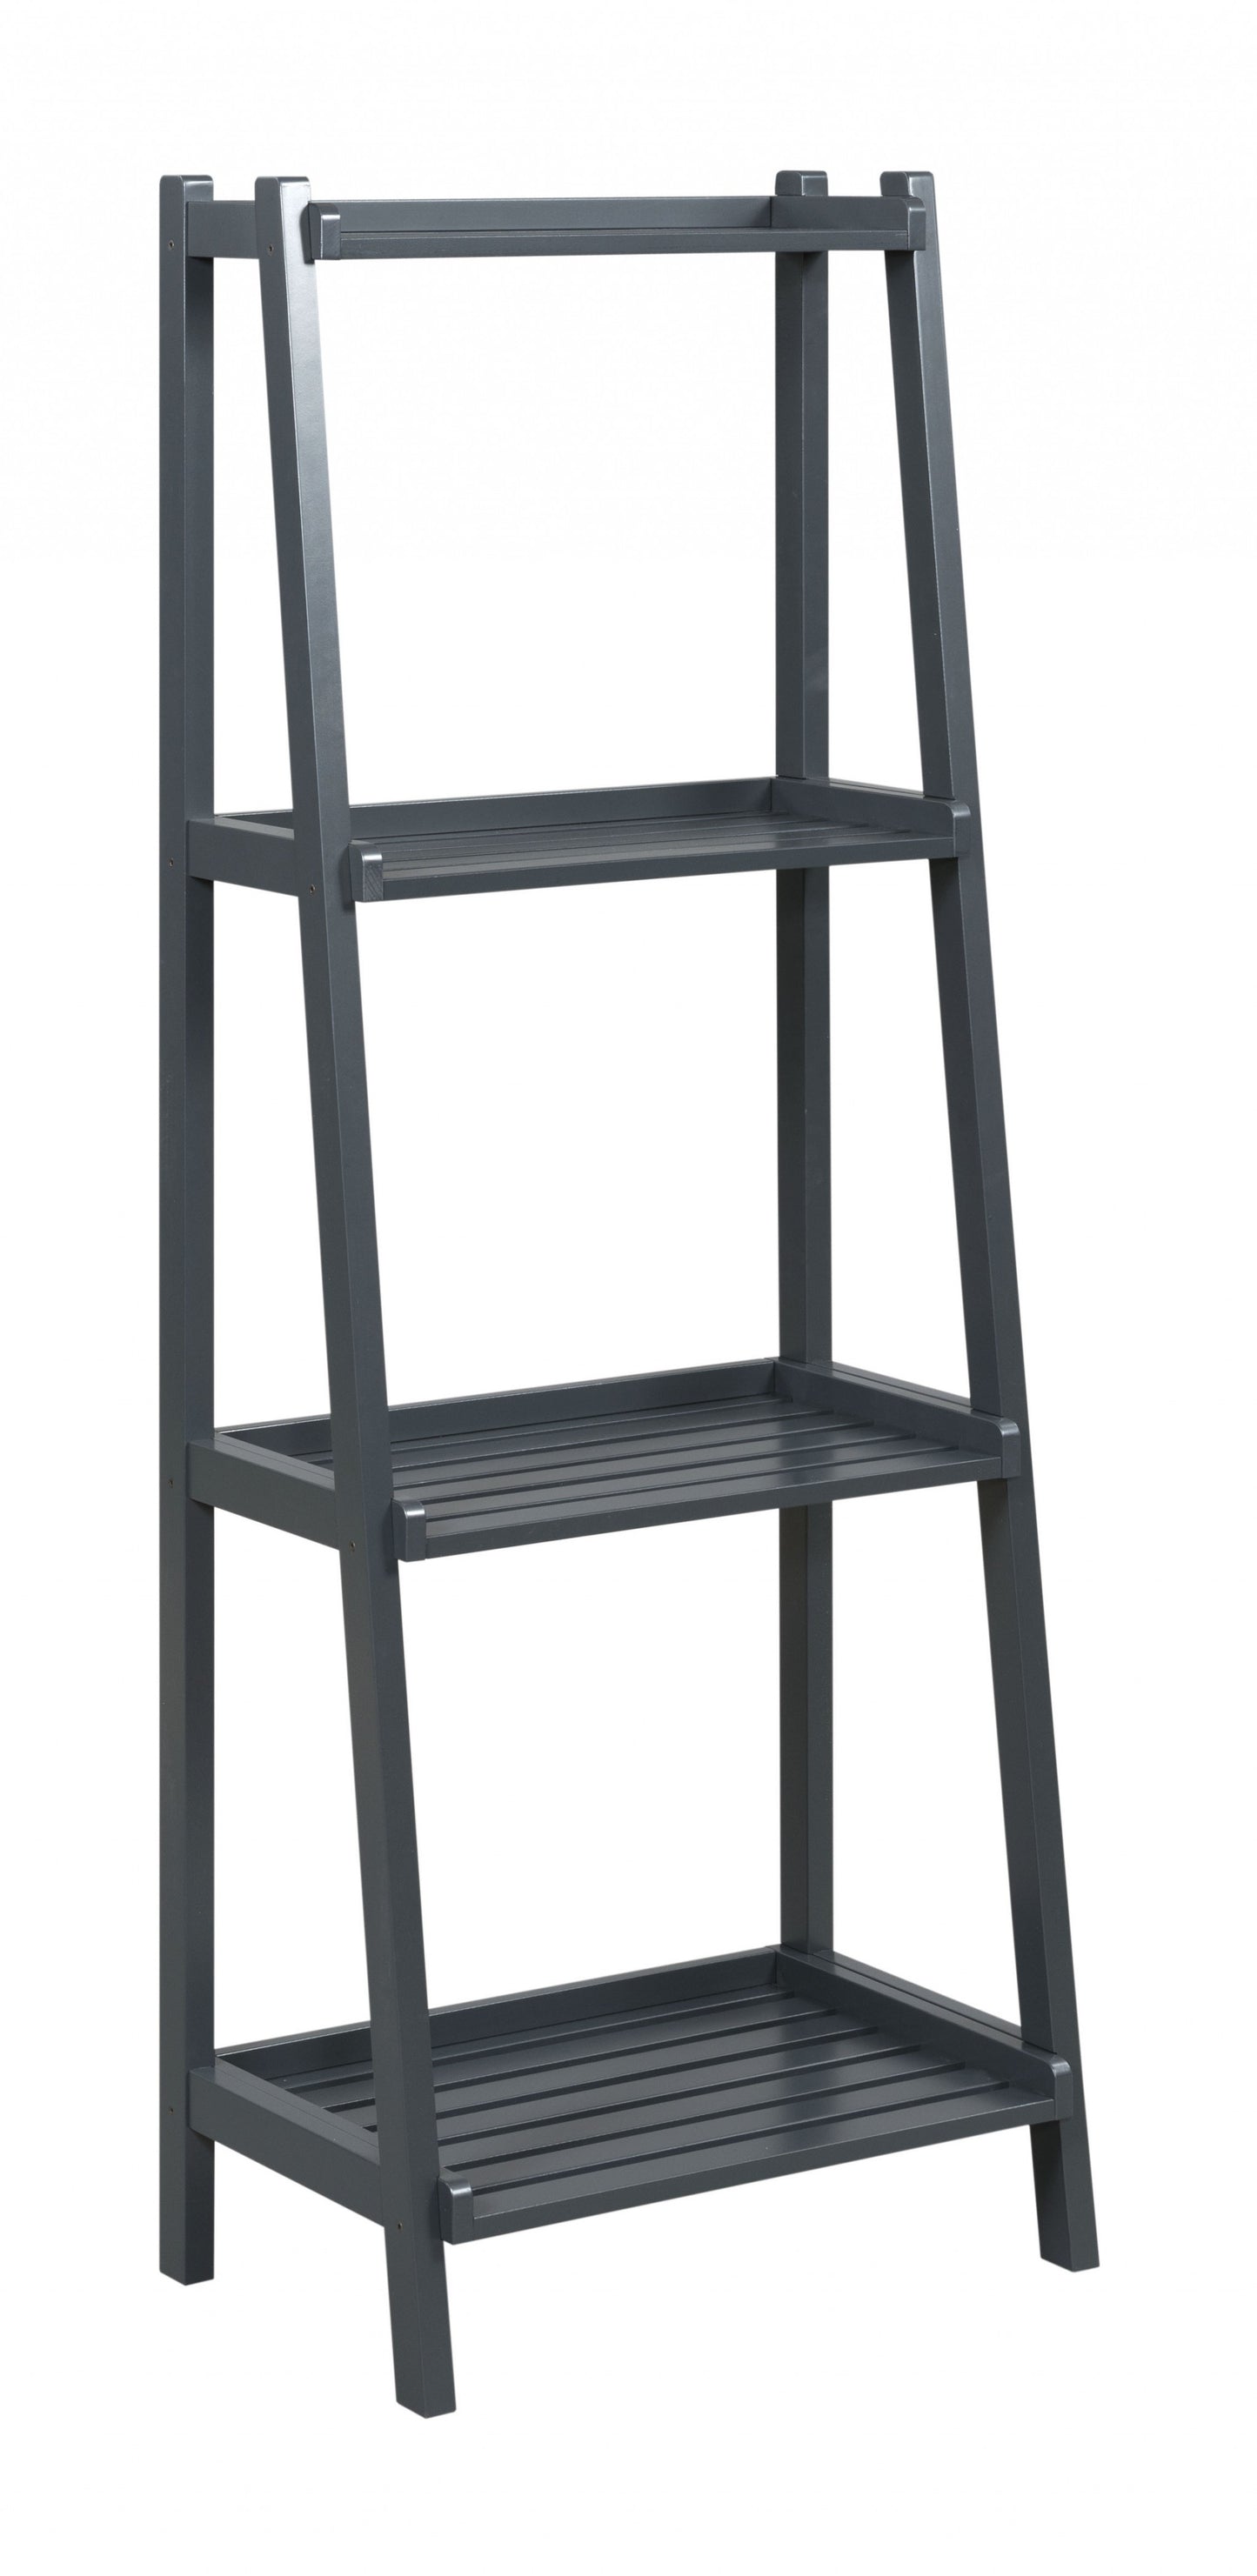 60" Leaning Ladder Bookshelf With 4 Shelves In Graphite